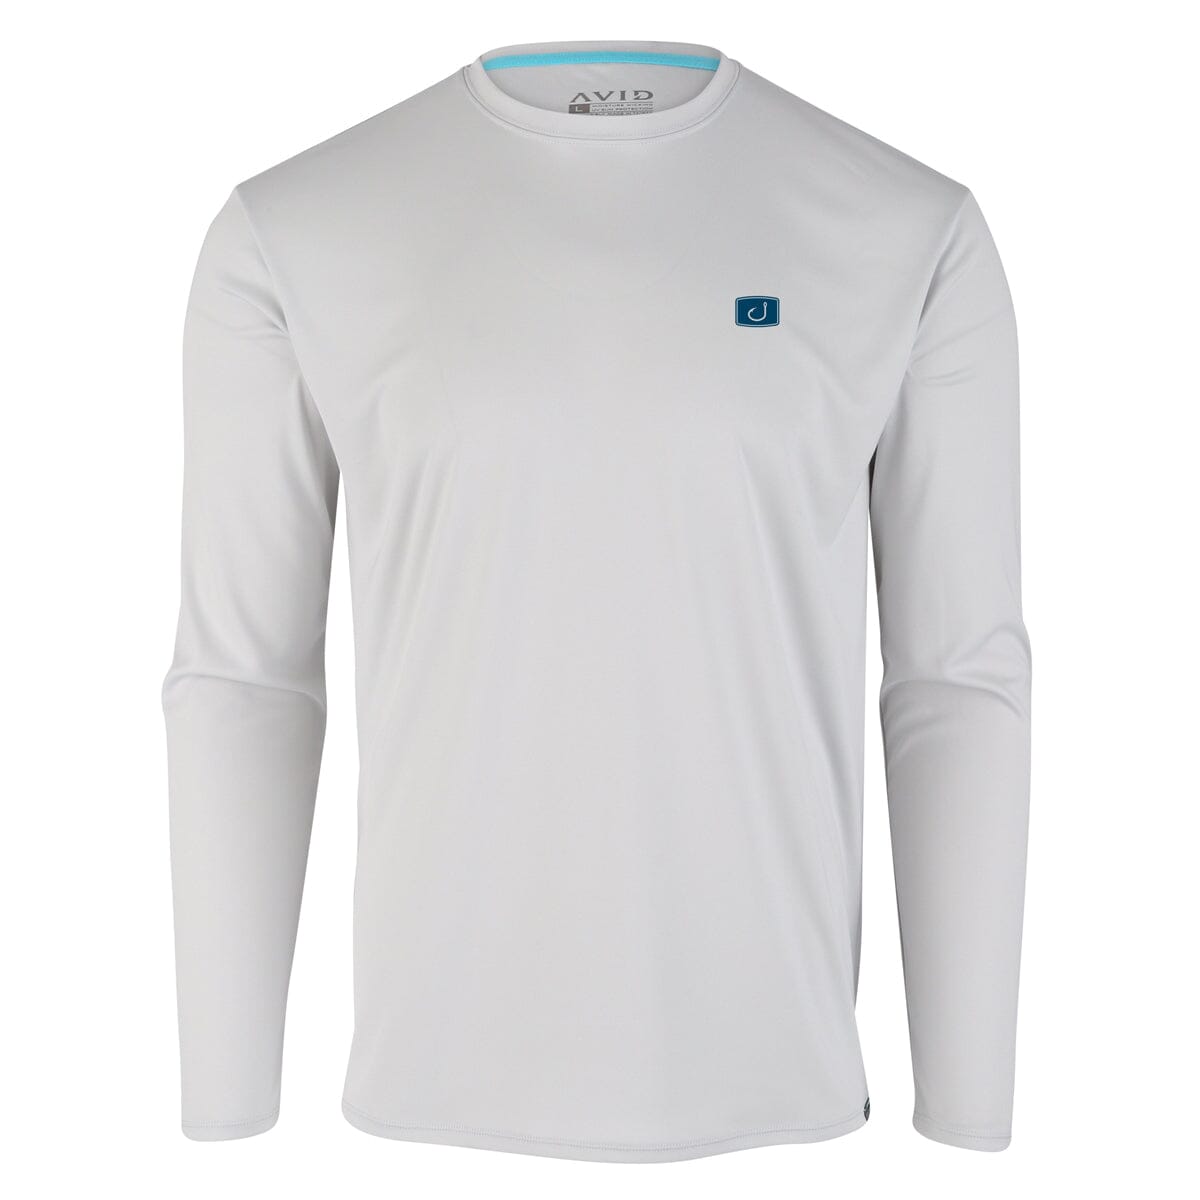 Core AVIDry Long Sleeve Performance Fishing Shirt 50+ UPF Glacier / LG